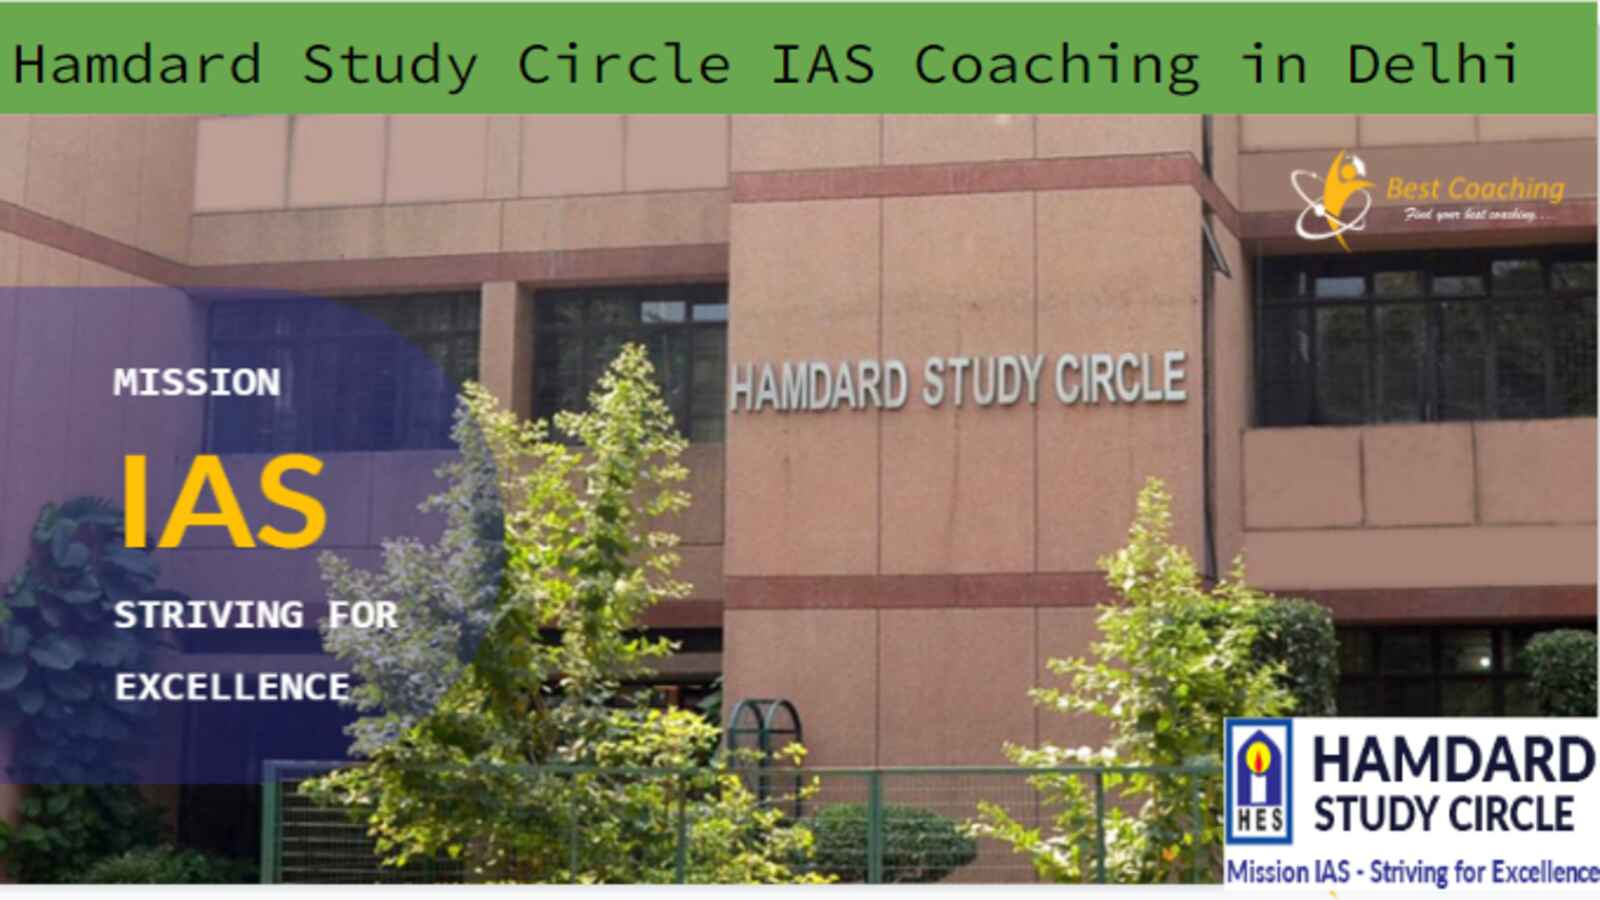 Hamdard Study Circle IAS Coaching Delhi